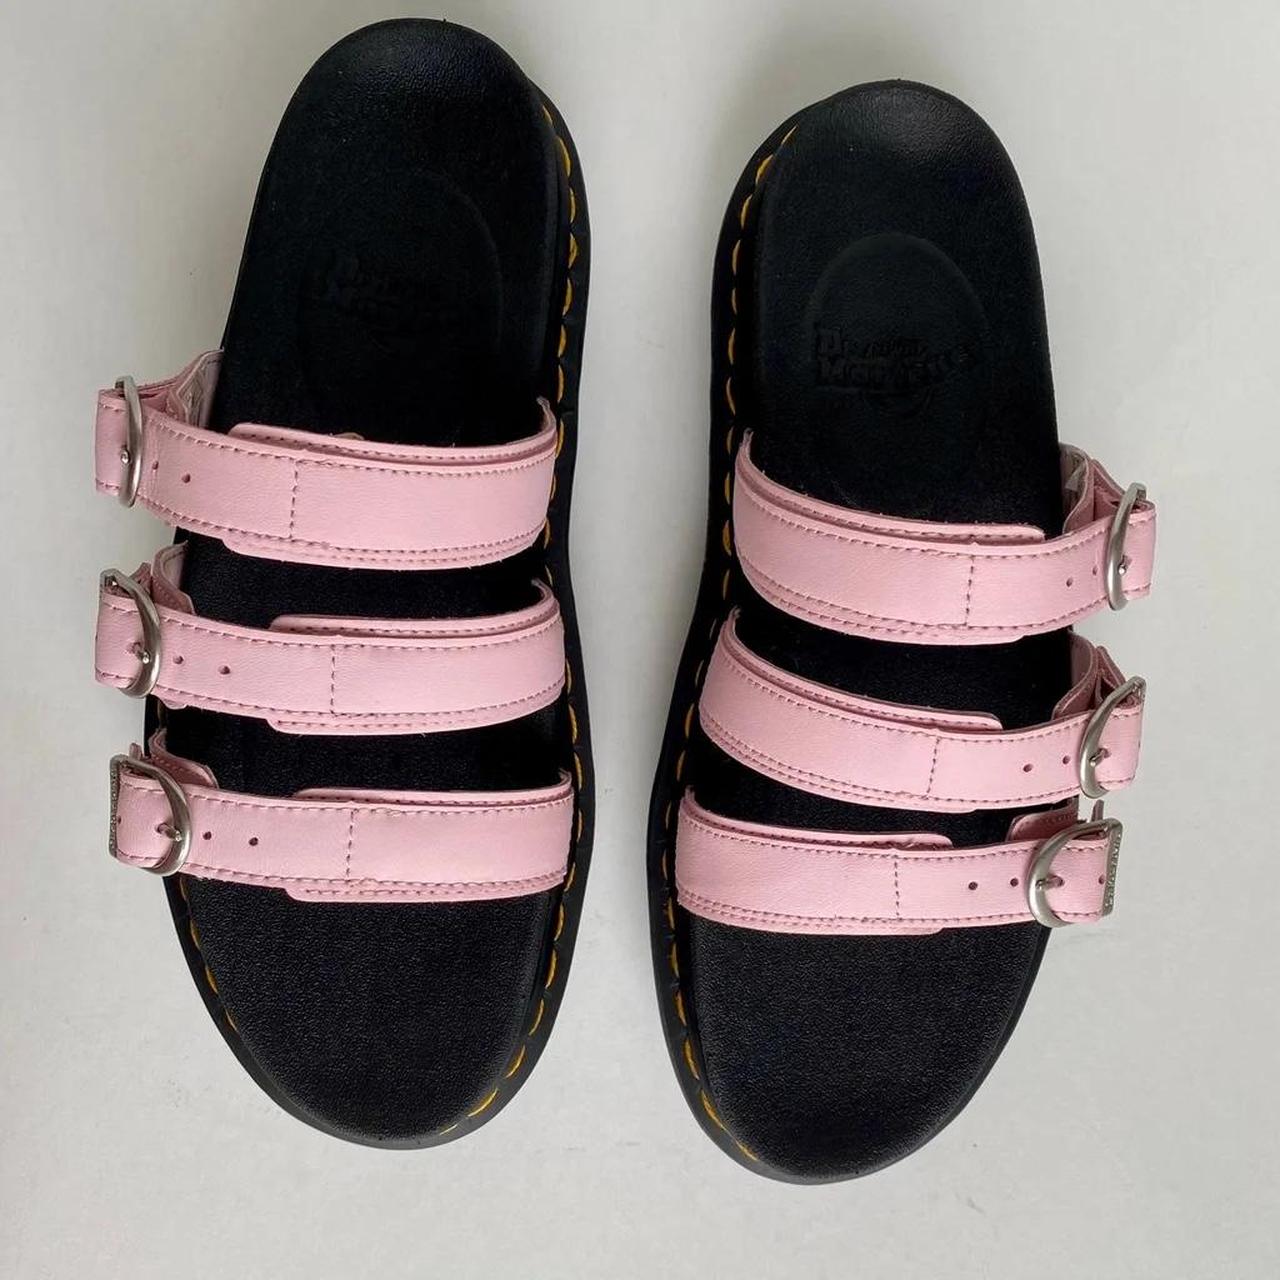 Dr. Martens Women’s Blaire Slides Sandals Chalk Pink... - Depop